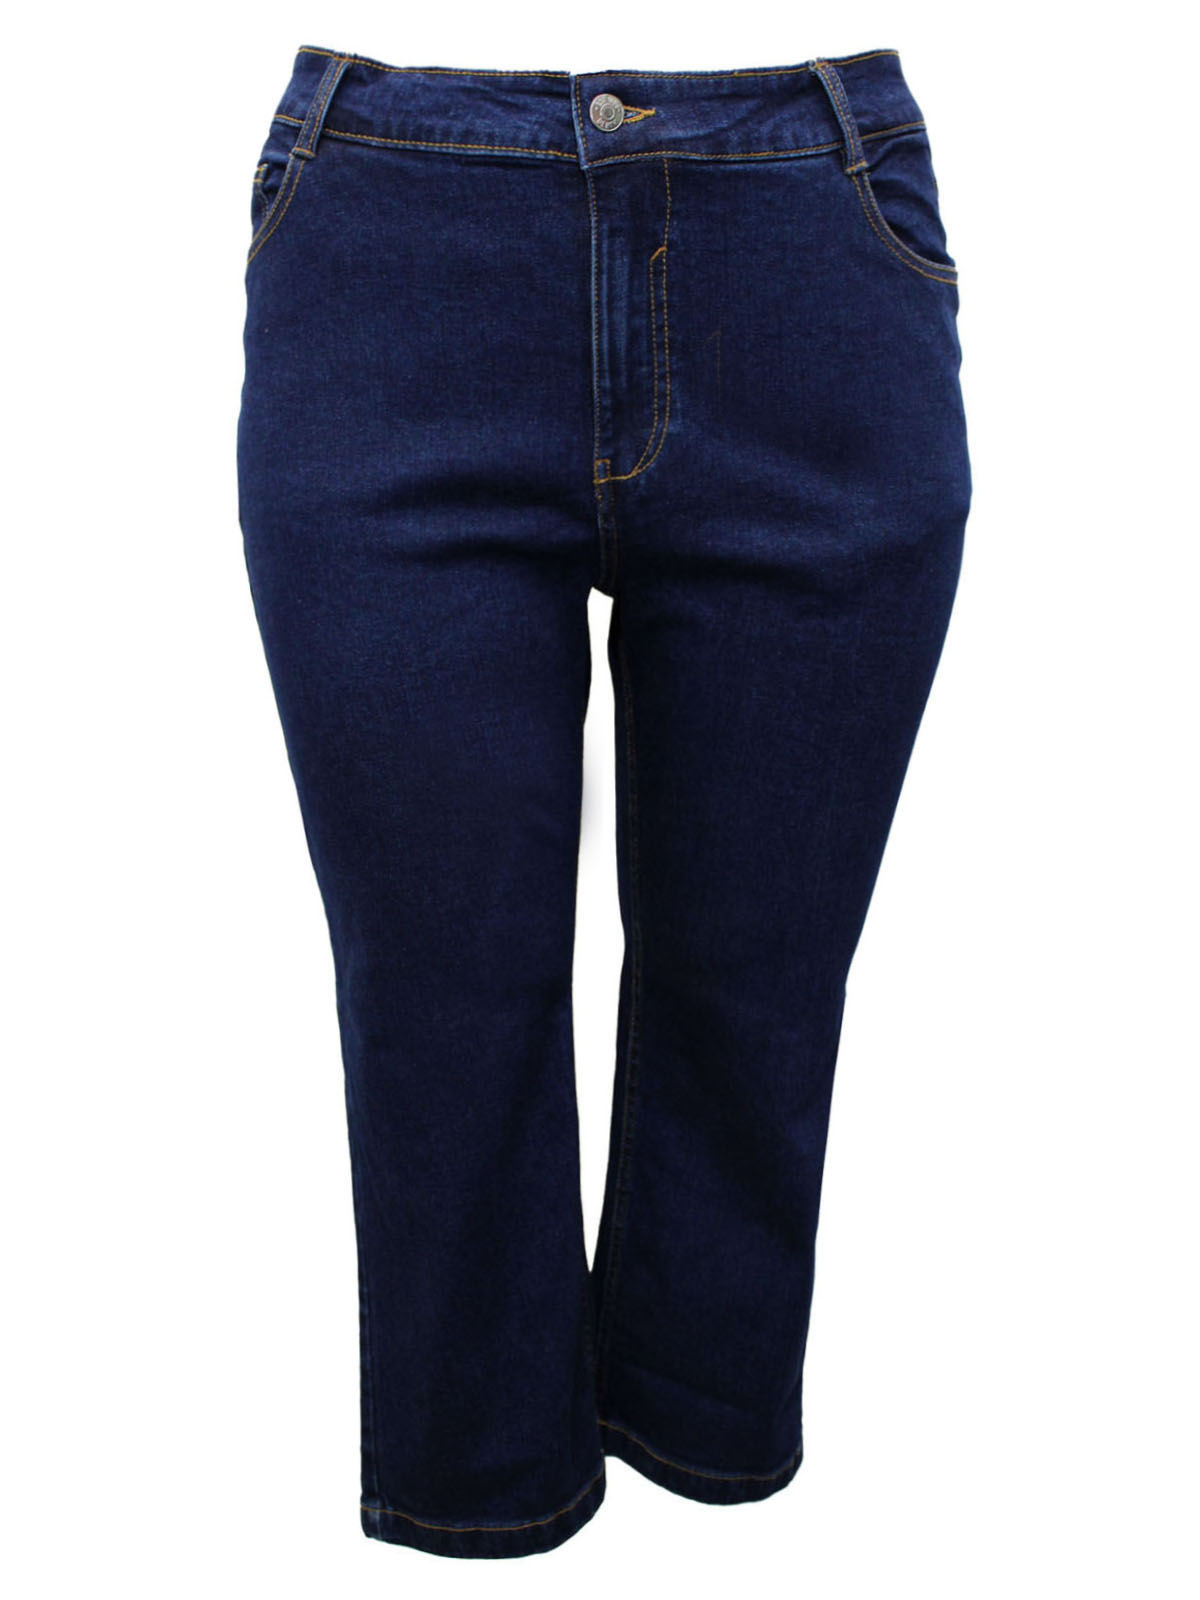 3VANS DARK-INDIGO Cropped High Rise Stretch Denim Jeans - Plus Size 18 ...